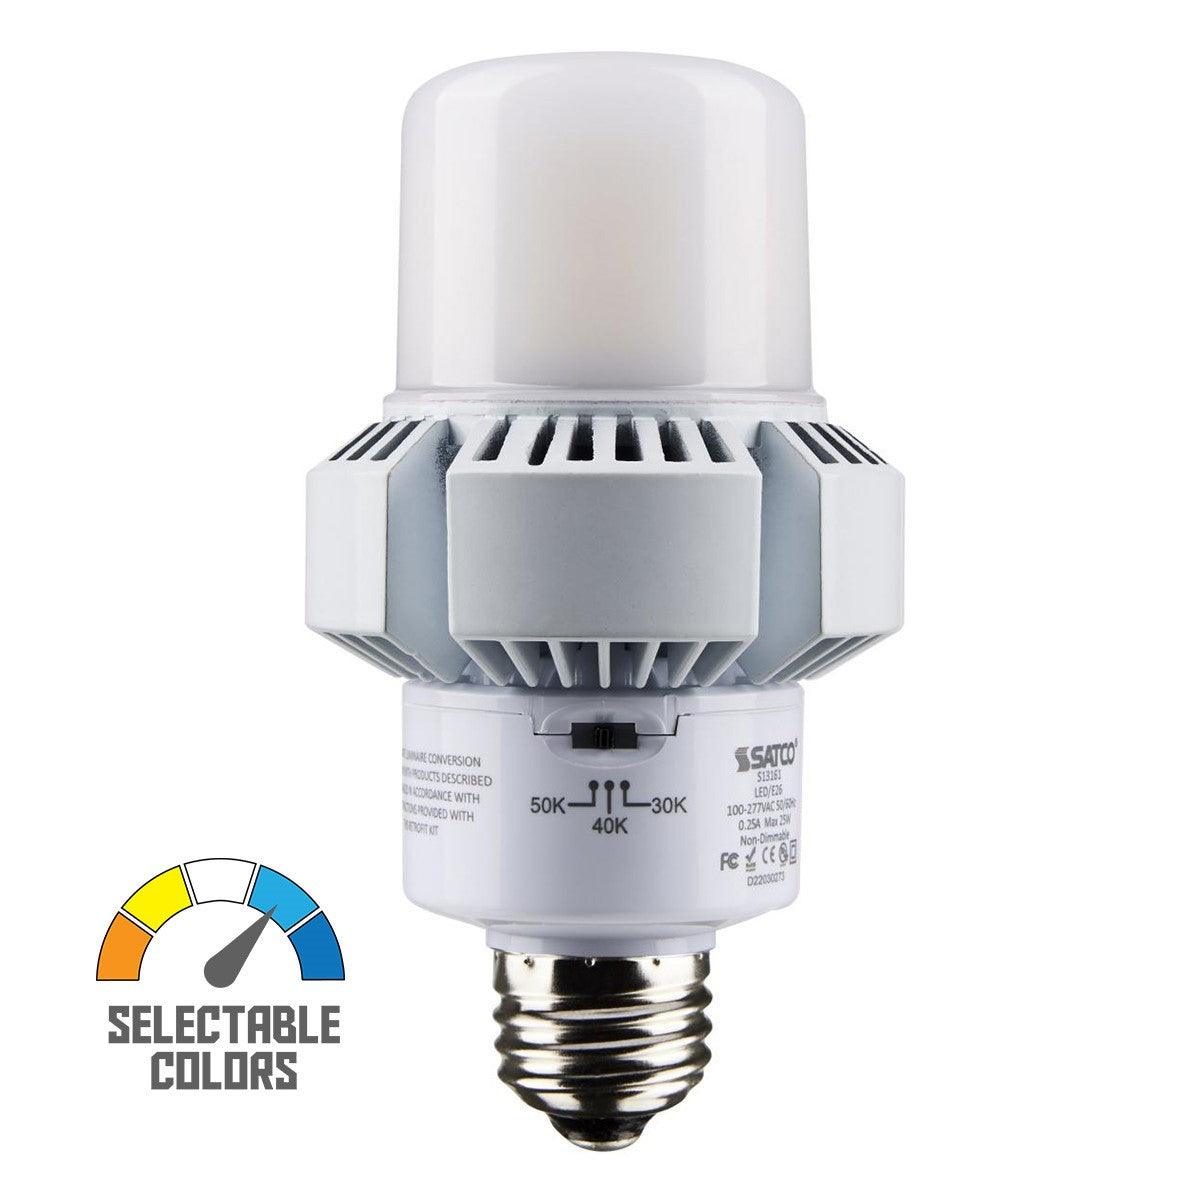 A23 LED Bulb, 25 Watt, 3250 Lumens, 30K/40K/50K, E26 Medium Base, Frosted Finish